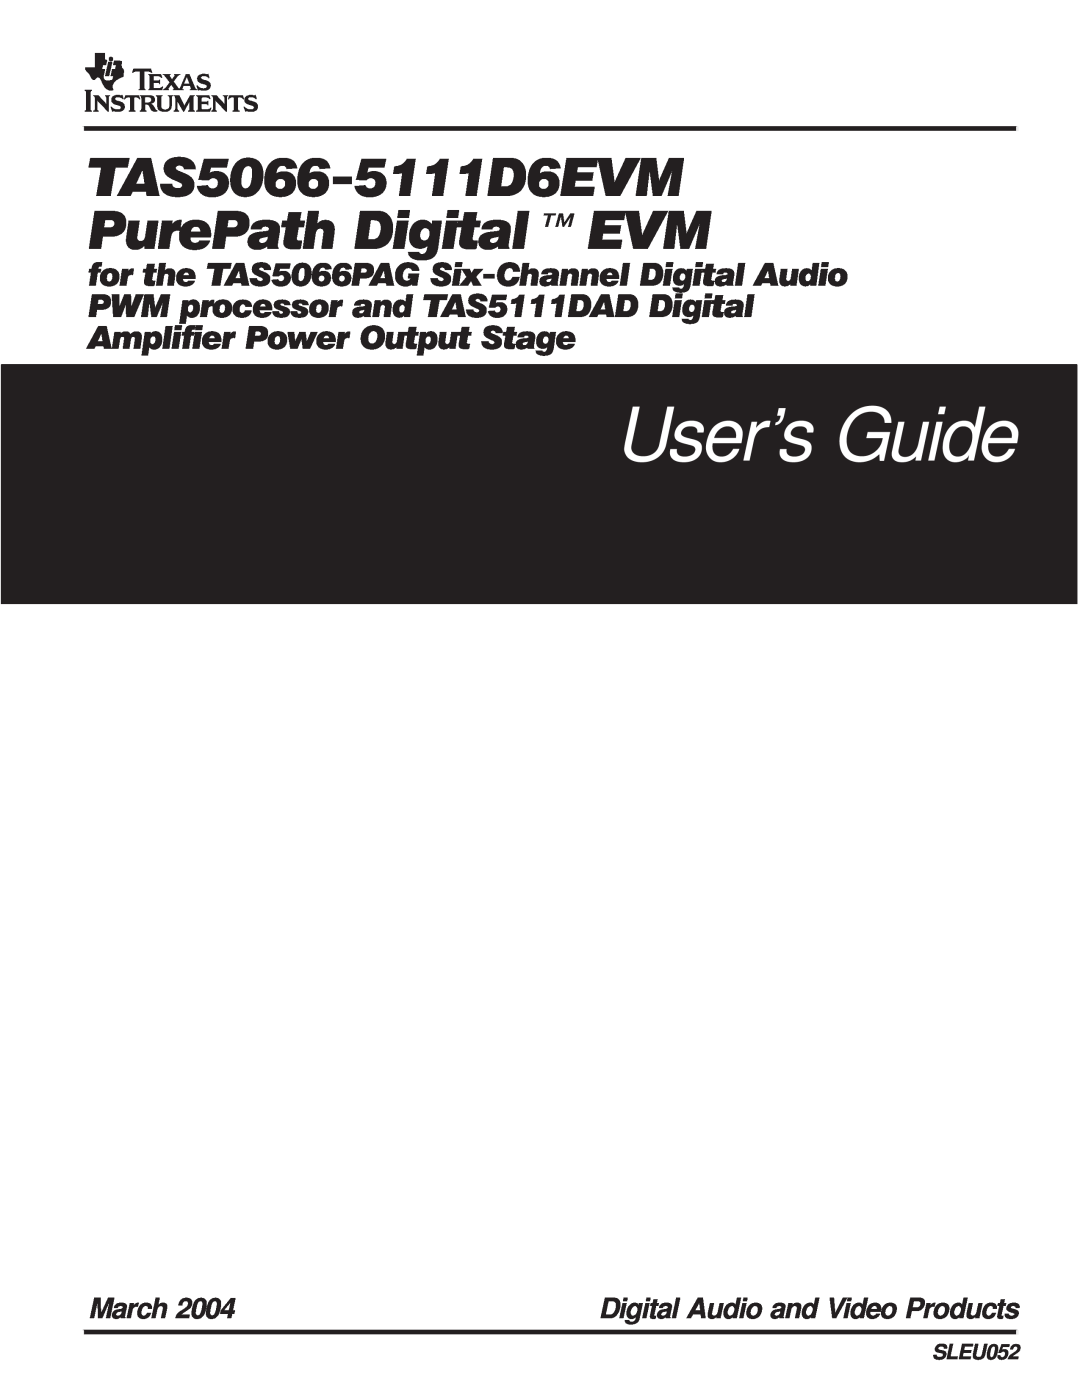 Texas Instruments TAS5066PAG manual User’s Guide, TAS5066-5111D6EVM PurePath DigitalE EVM, March, SLEU052 